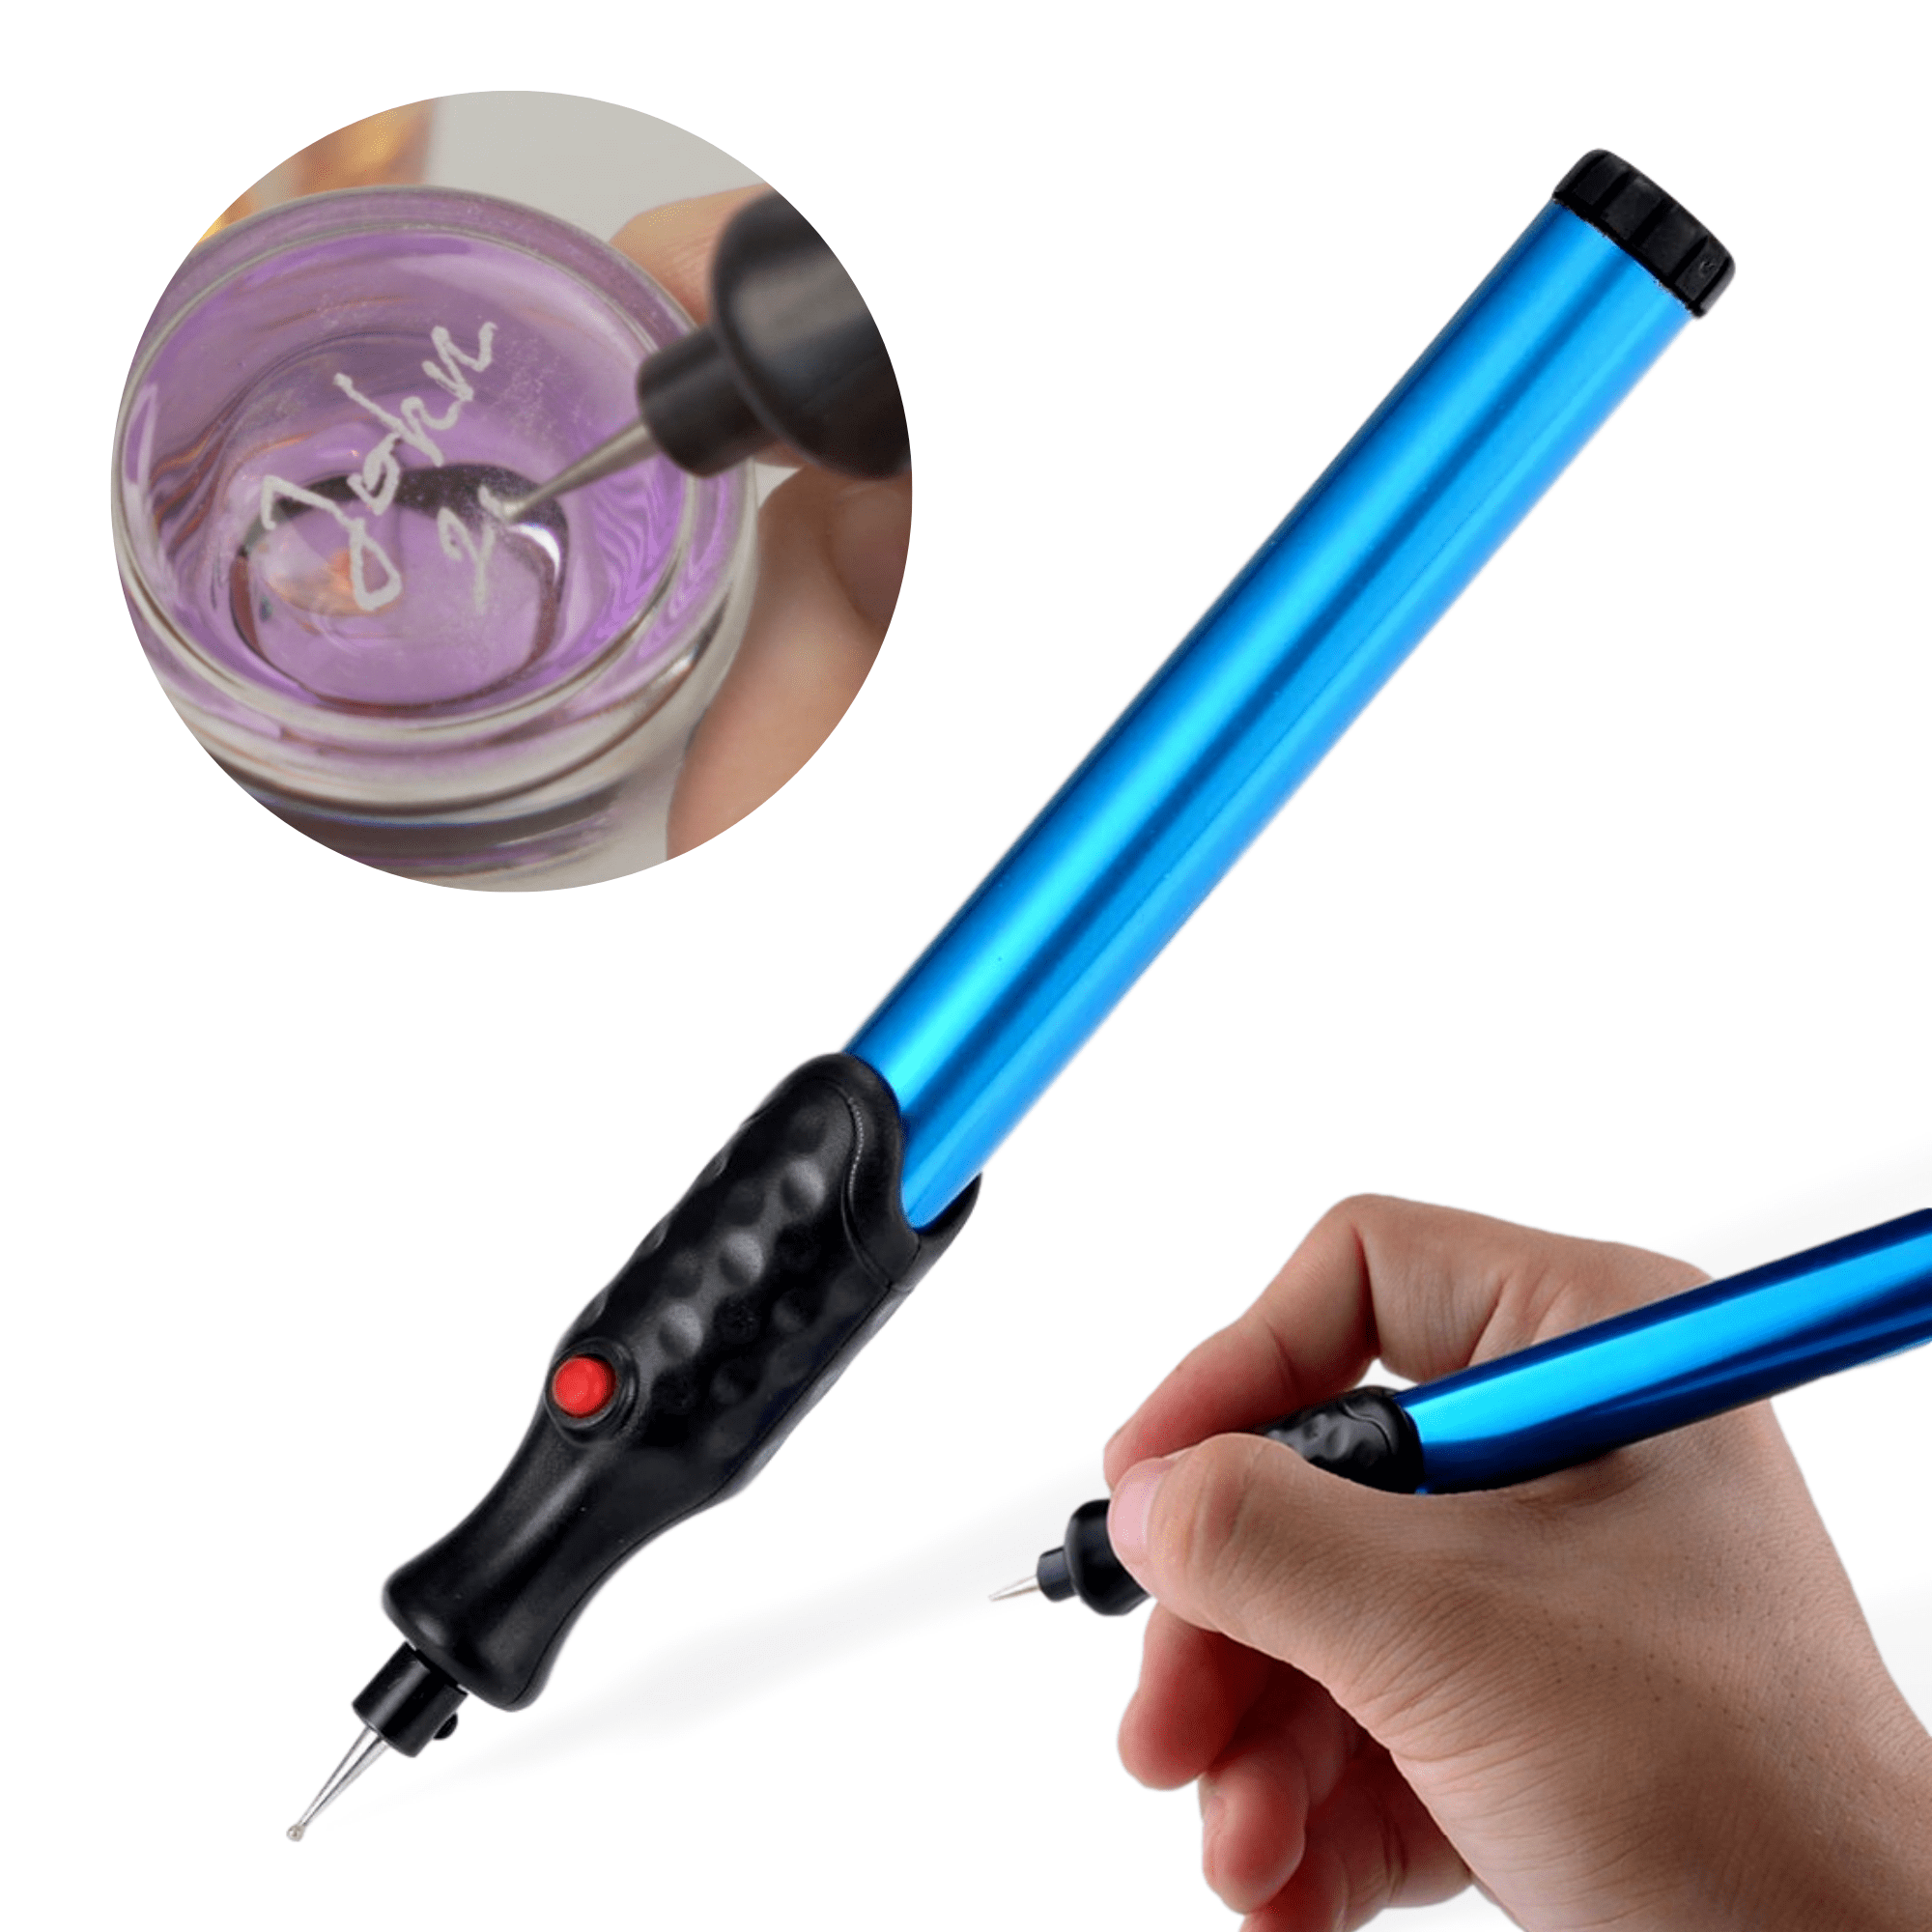 The Artisan Pen – A DIY Engraving Pen, Artisan DIY Pen Engraving Tool for  Metal, Wood, Glass and Plastic, USB Rechargable Cordless Professional